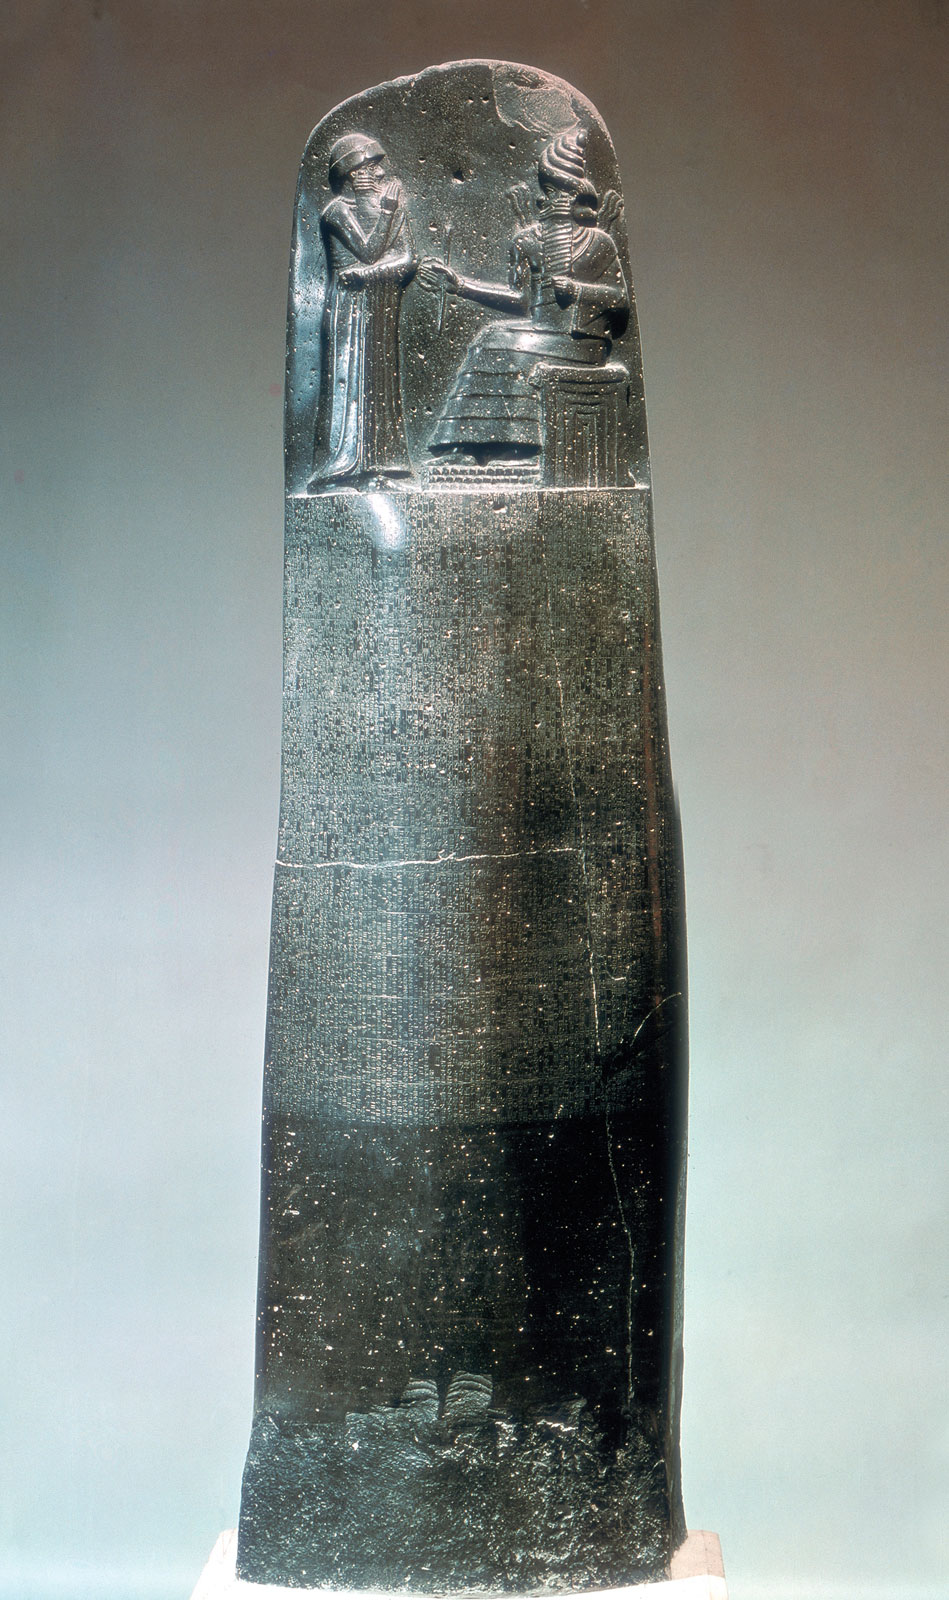 The Code of Hammurabi inscribed into stone.